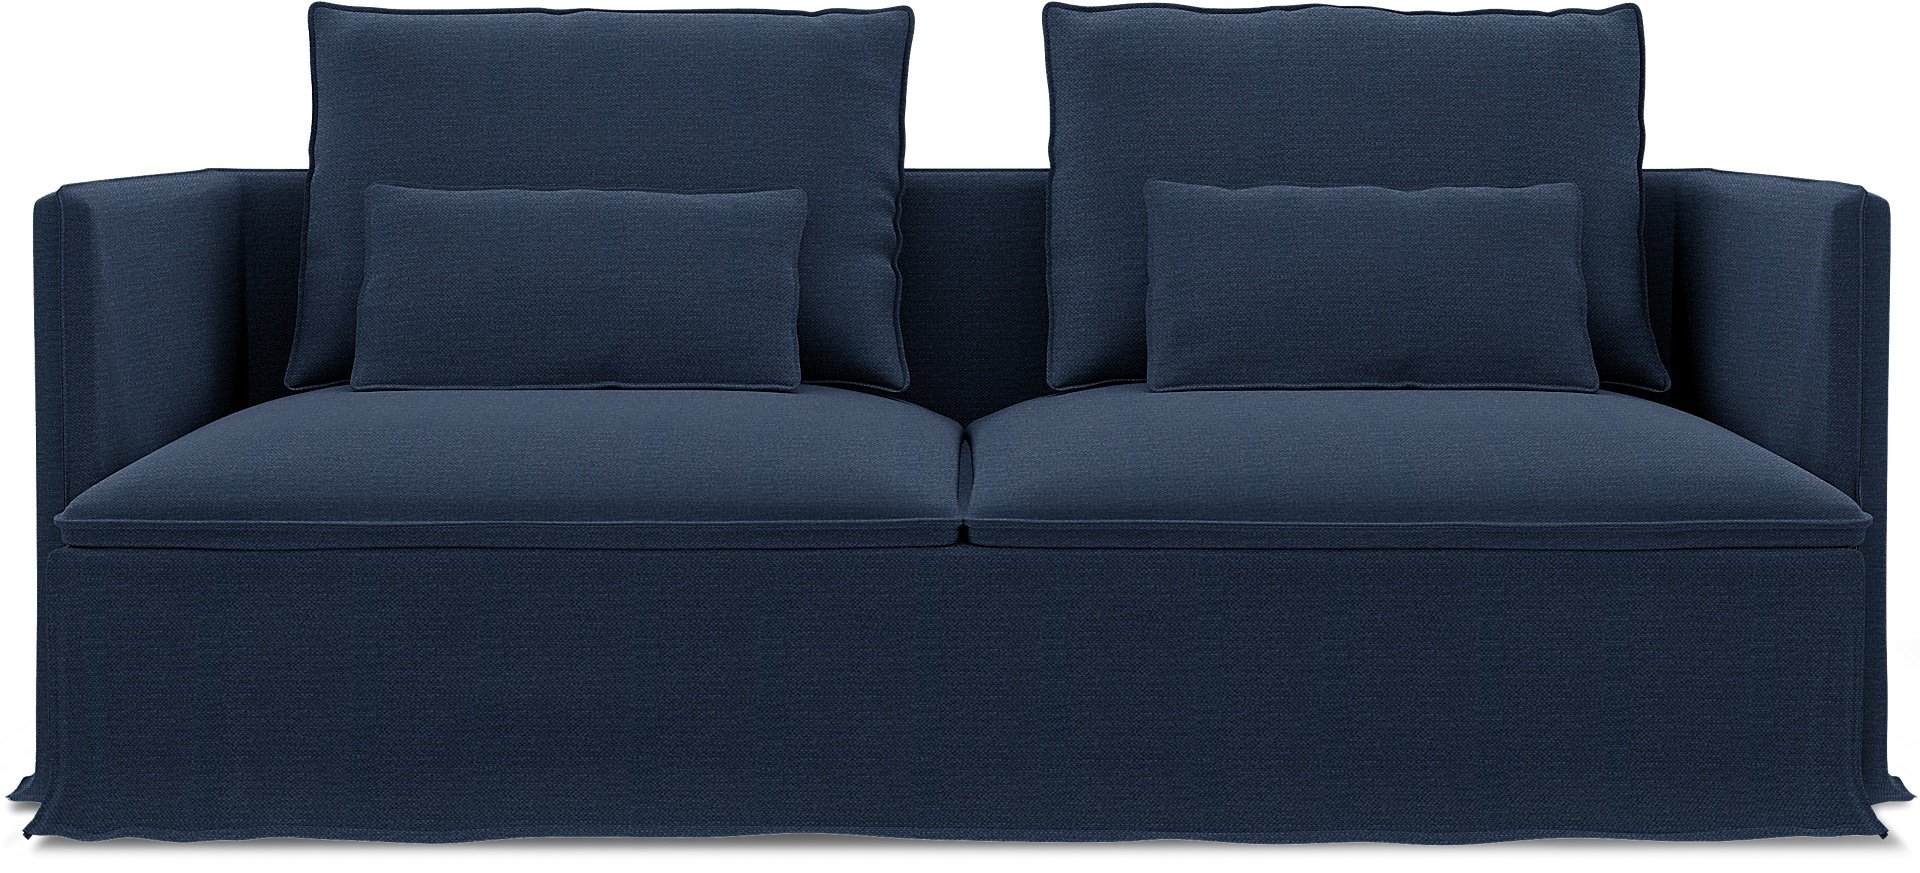 IKEA - Soderhamn 3 Seater Sofa Cover, Navy Blue, Linen - Bemz